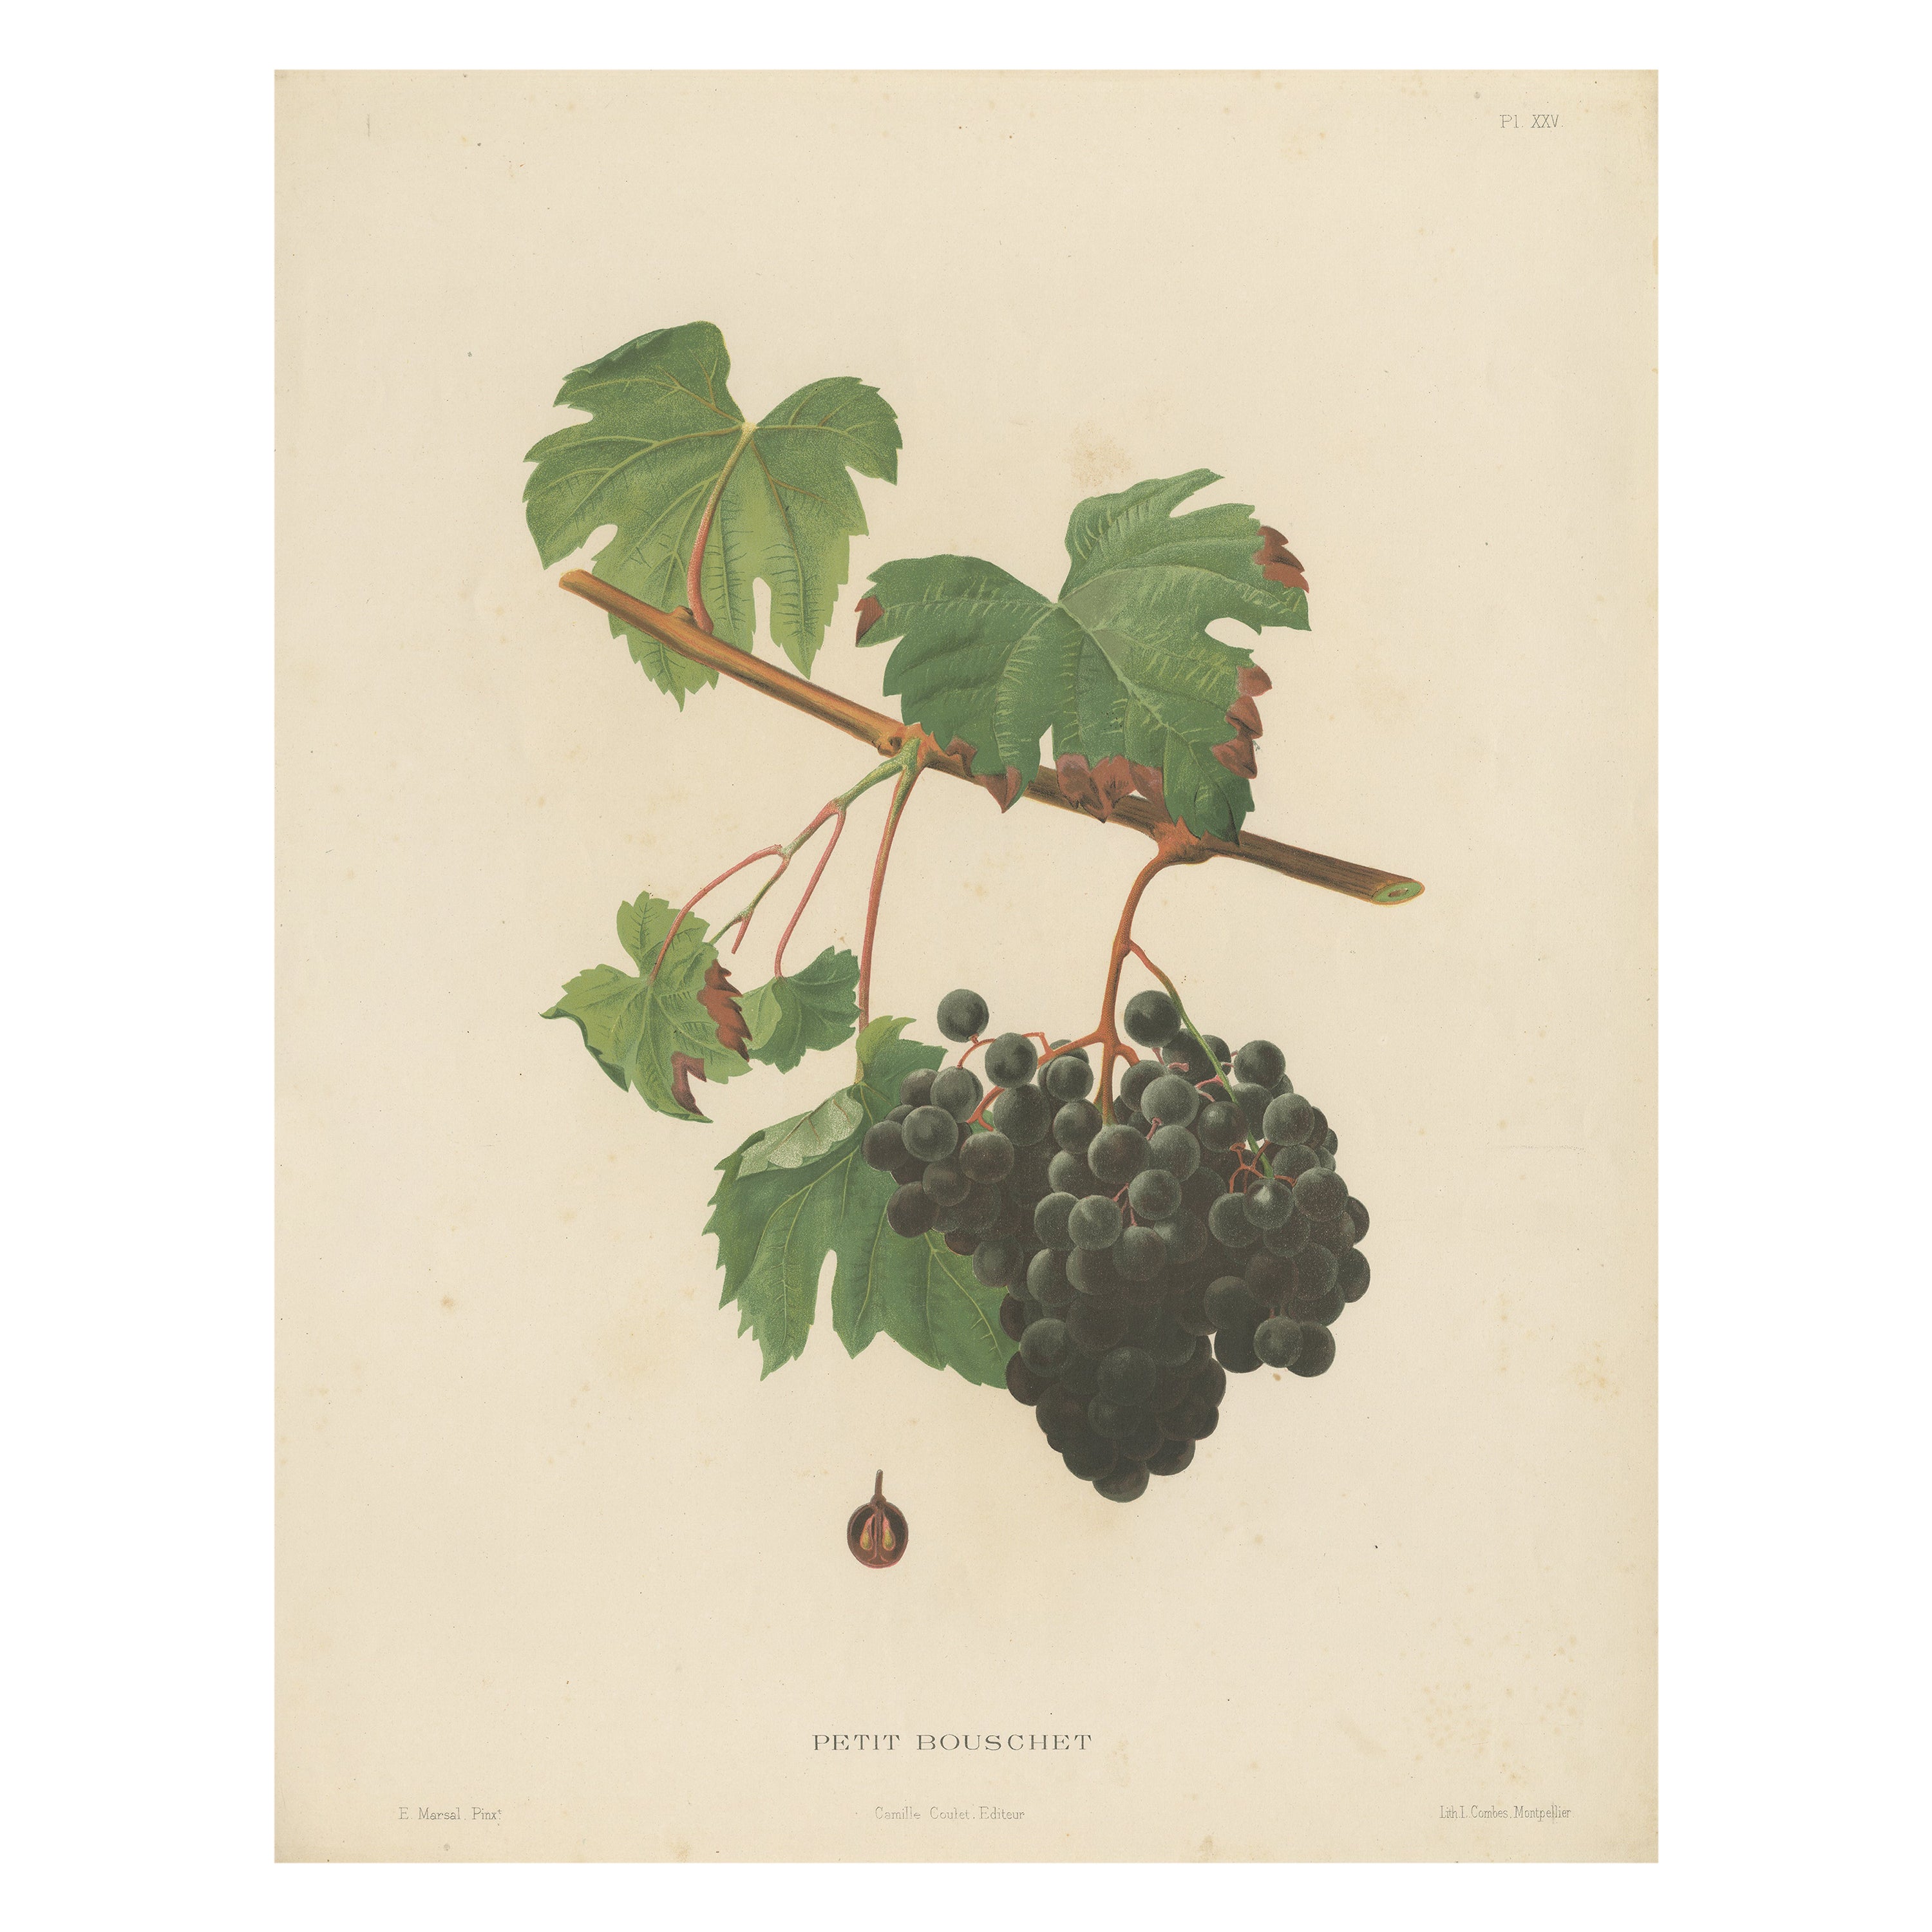 Rare Original Antique Lithograph of the Petit Bouschet Grape Variety, 1890